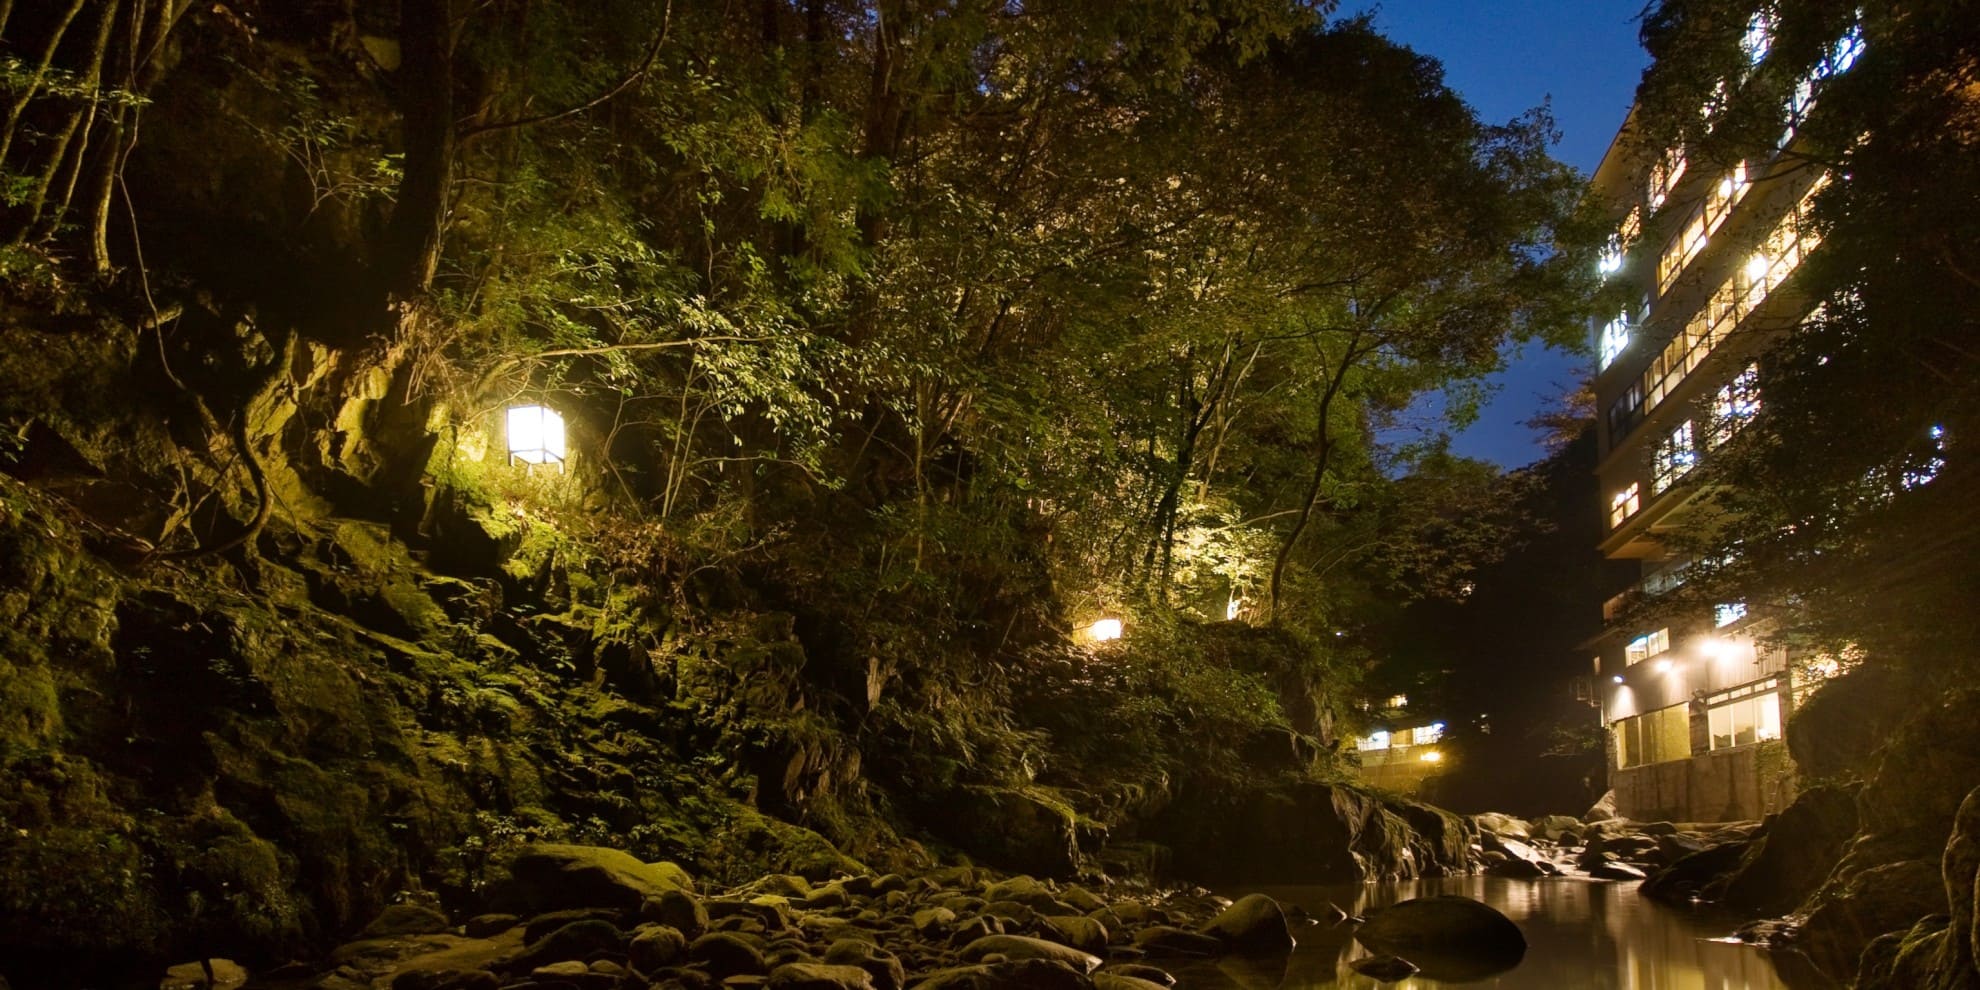 Night view of Mikado viewed from the Nibukawa Valley